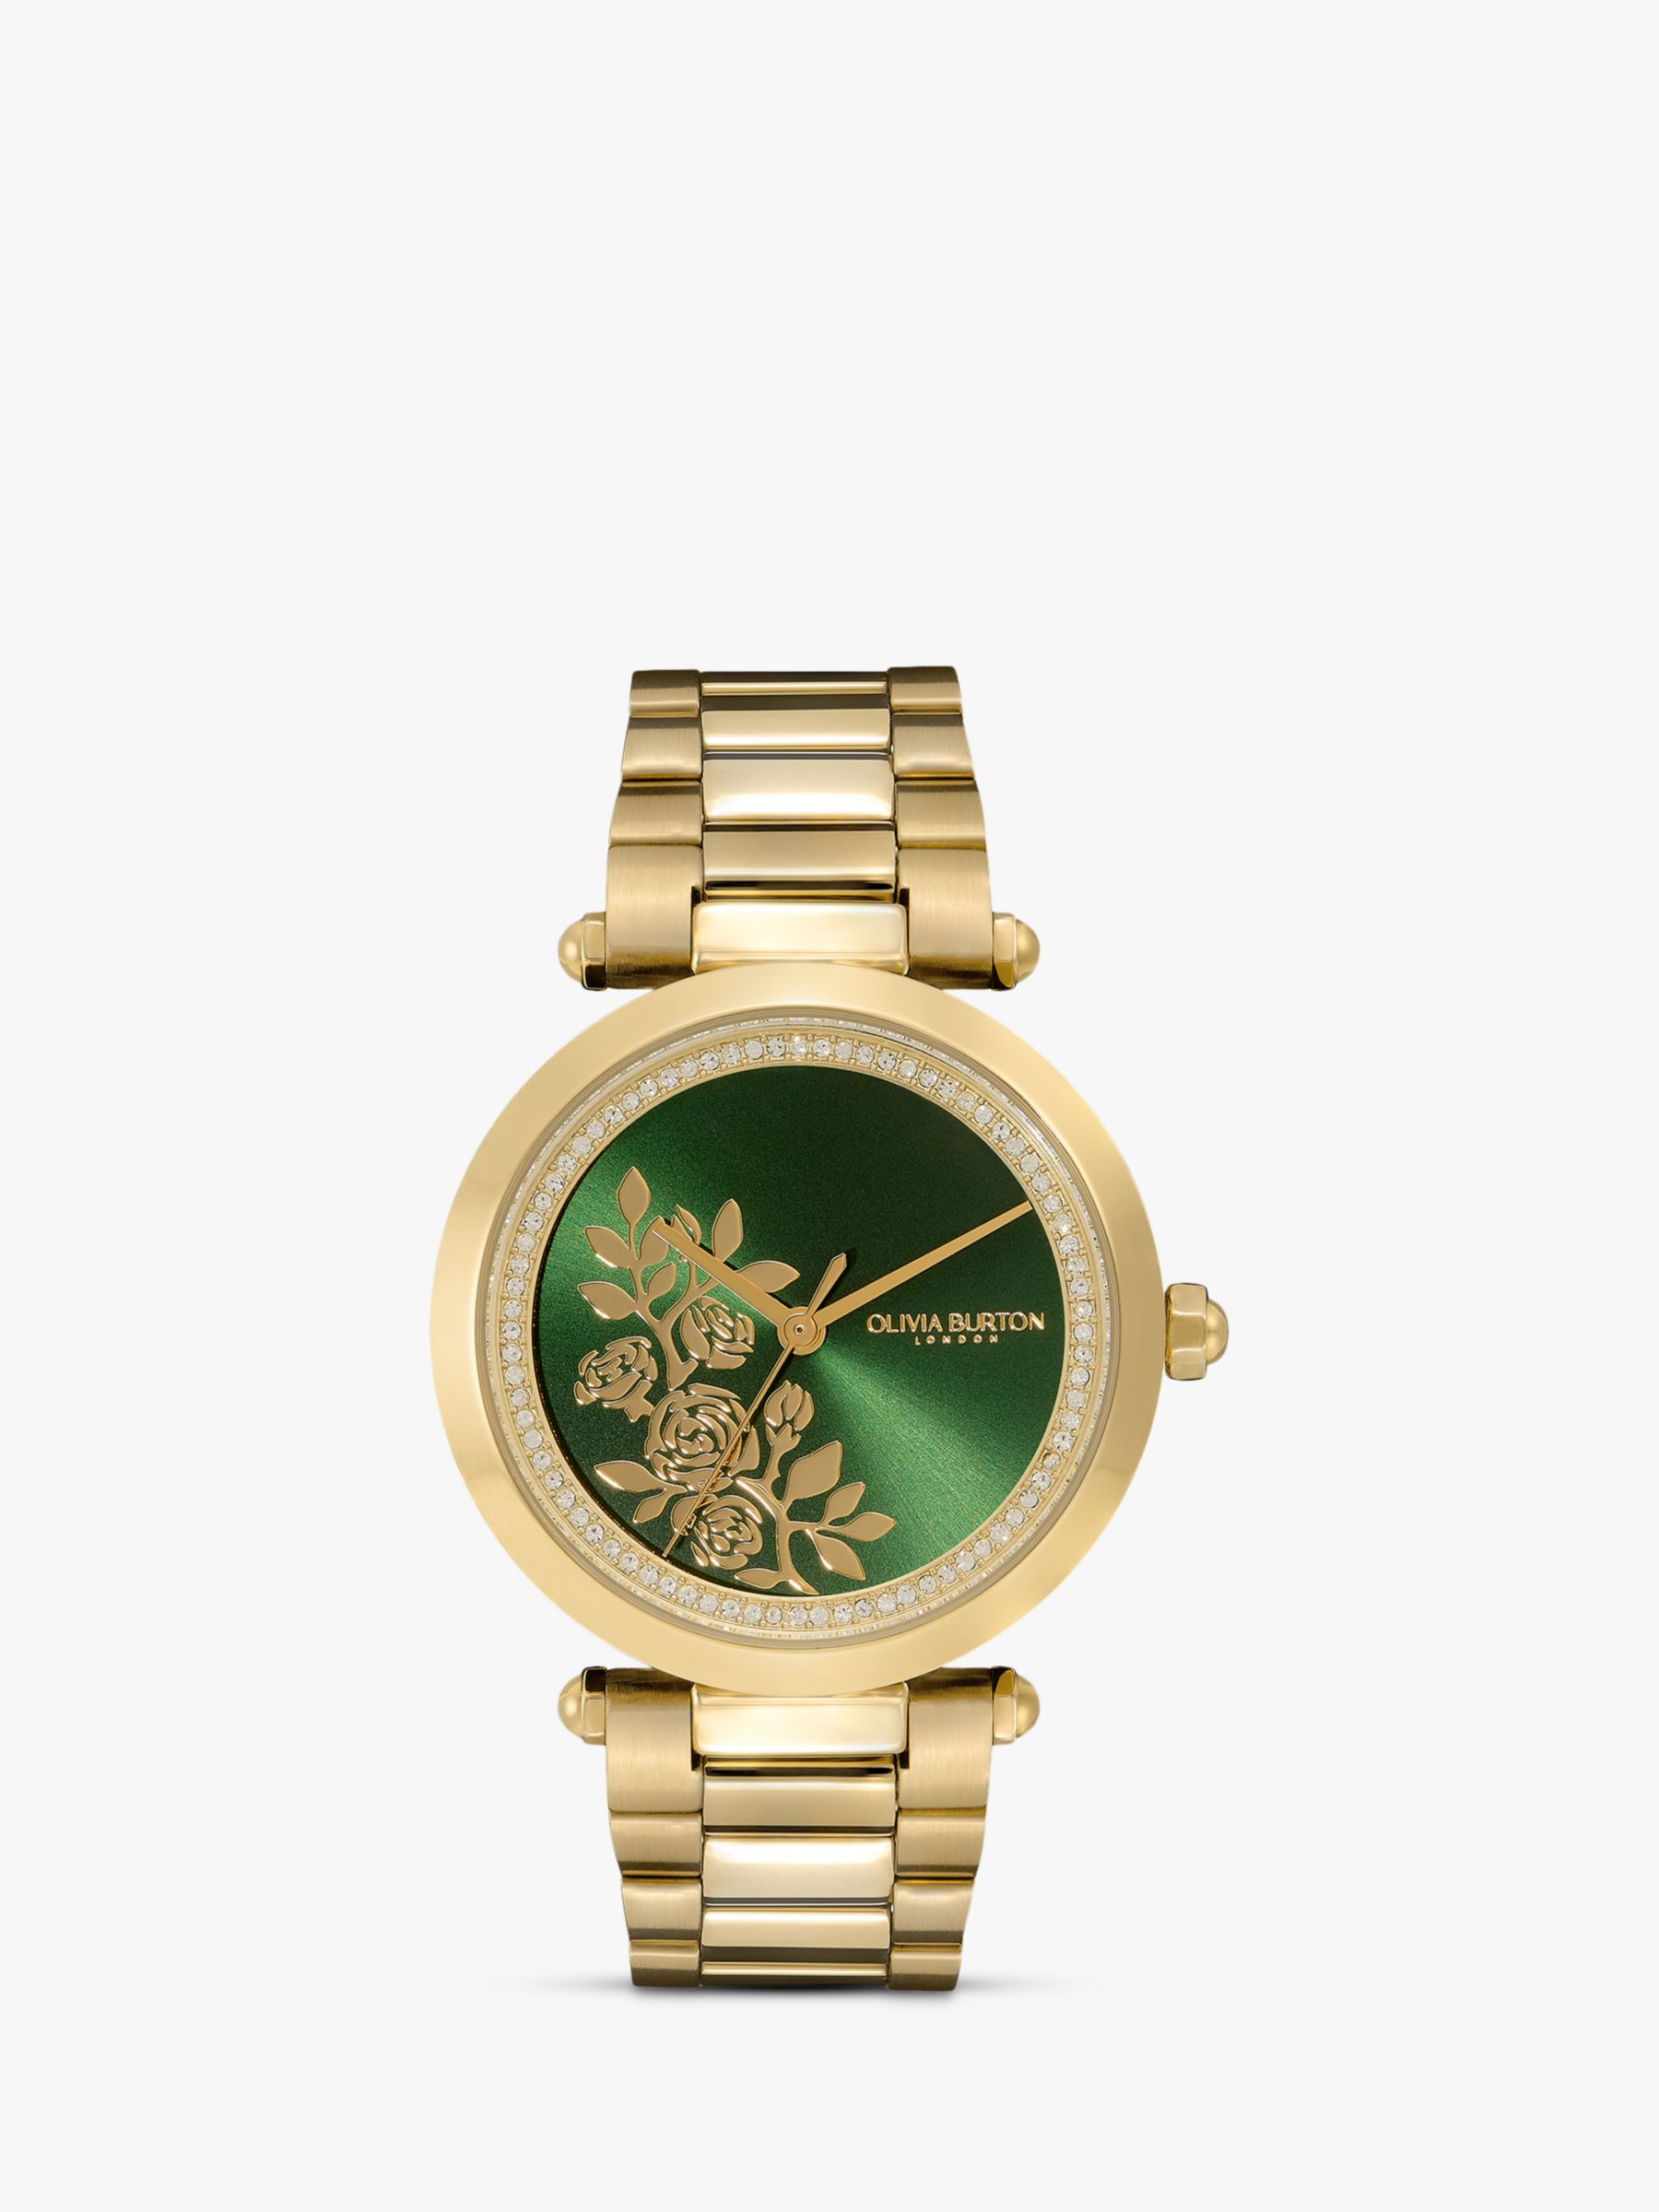 Classics 23mm Blush & Rose Gold Bracelet Watch | Olivia Burton London